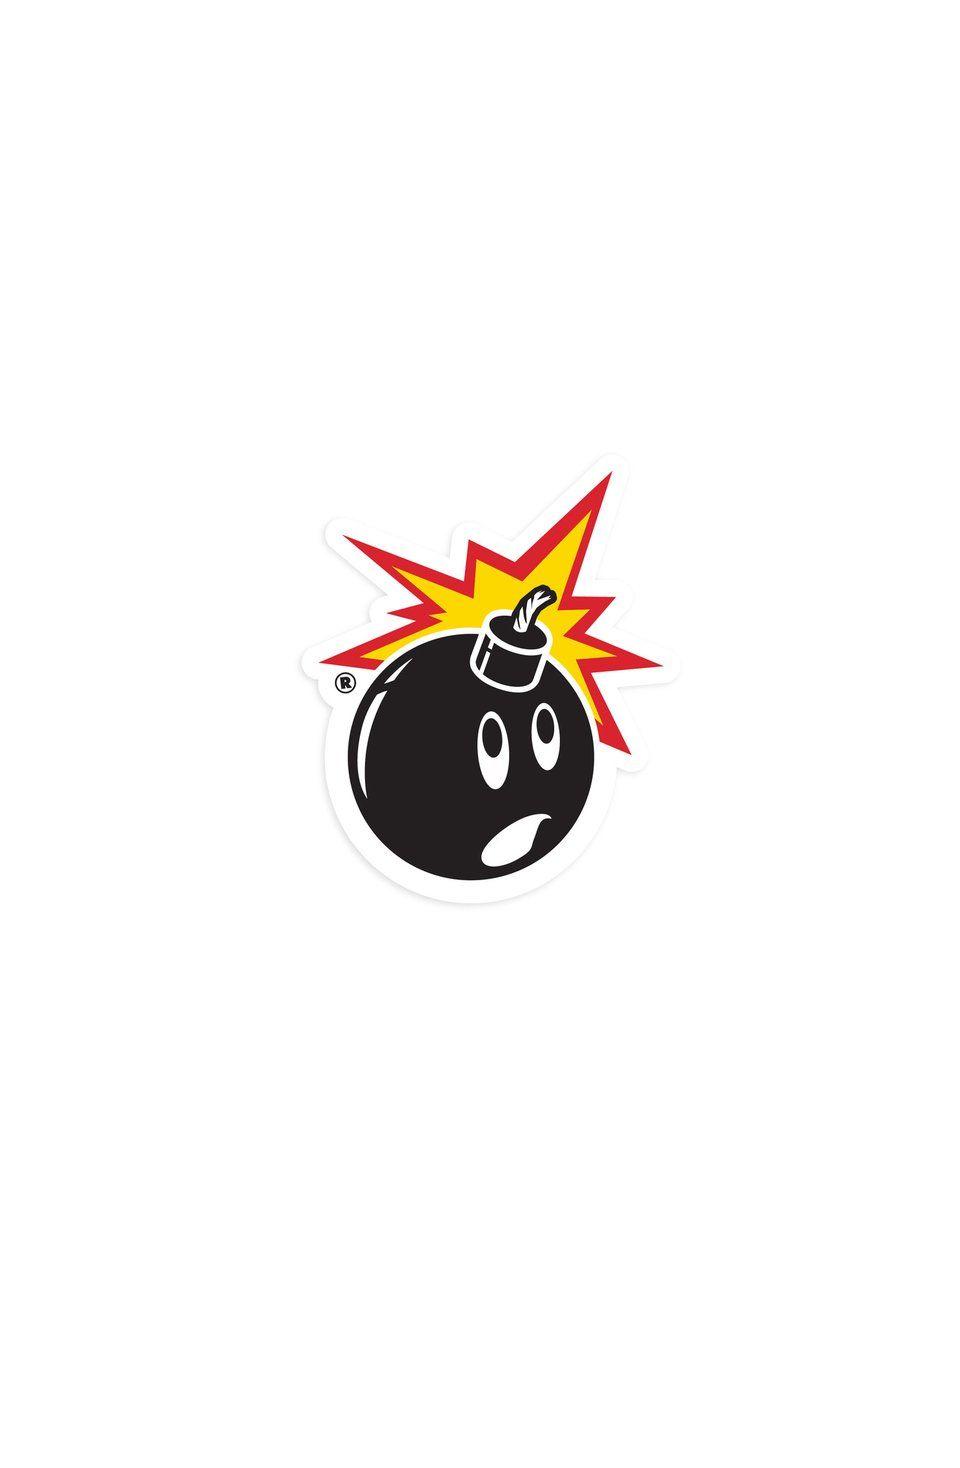 100s Bomb Logo - The Hundreds